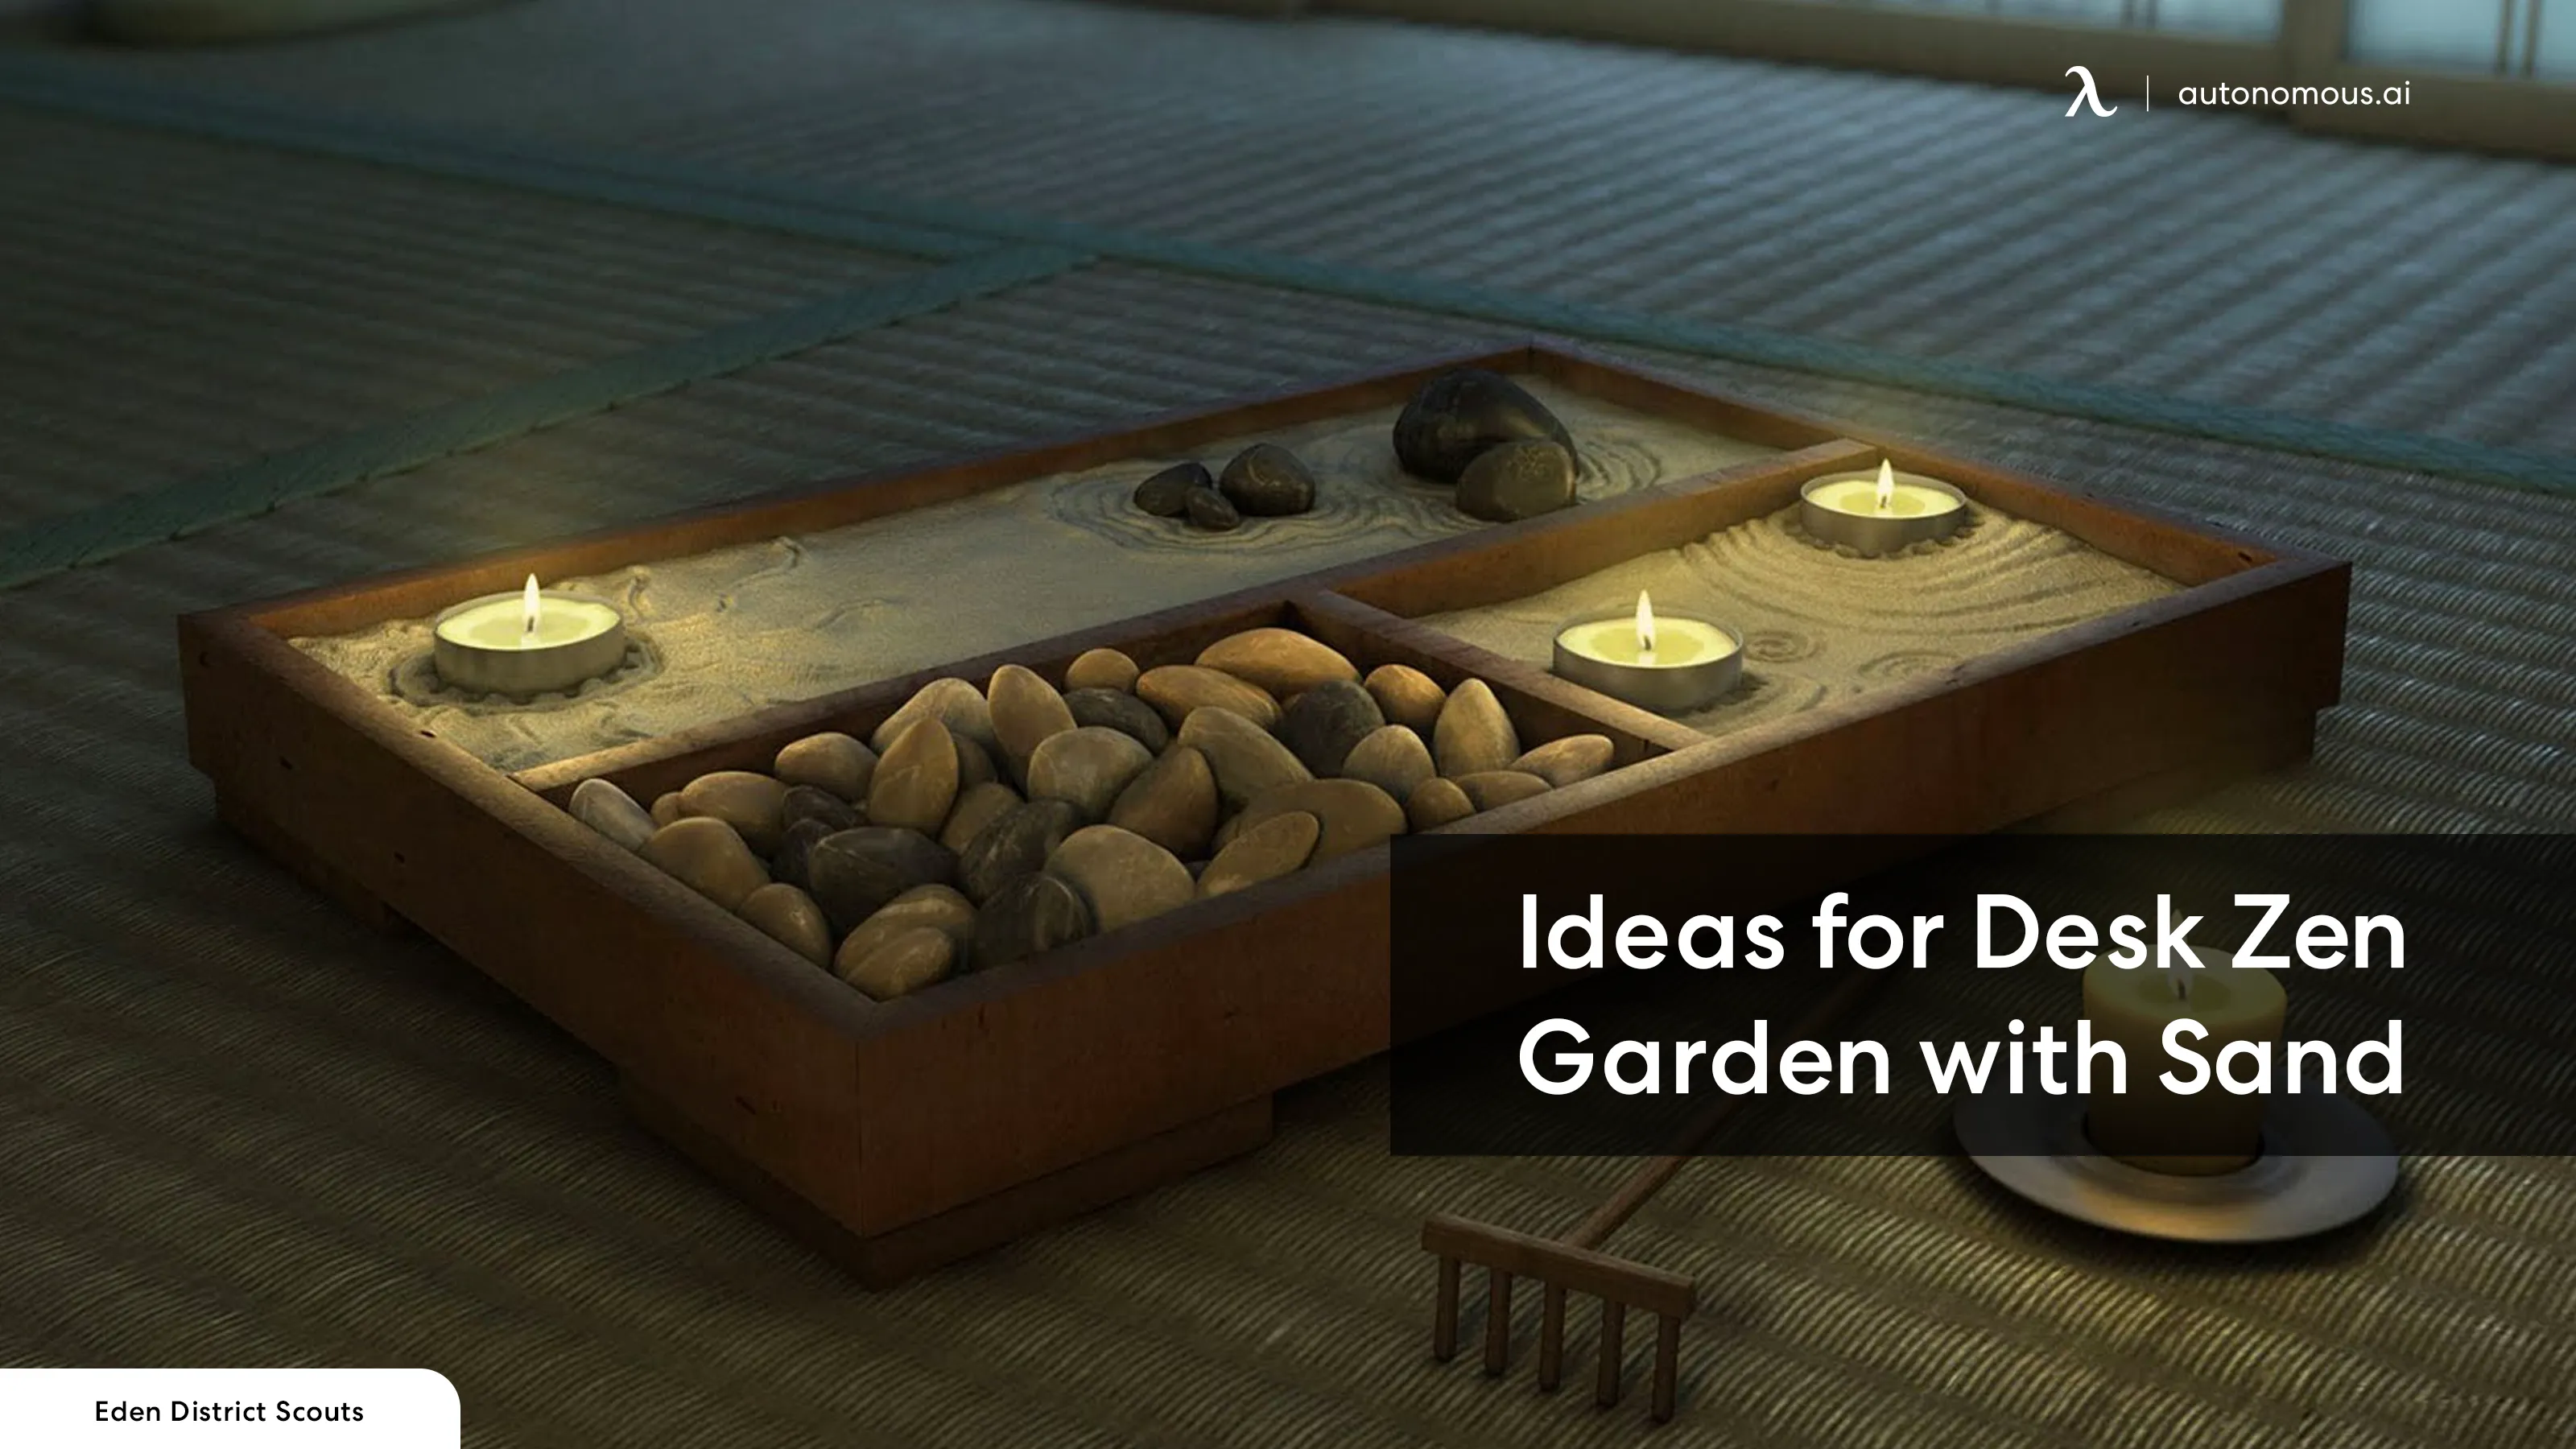 Zen Sand Garden for Desk: A Calming Workspace